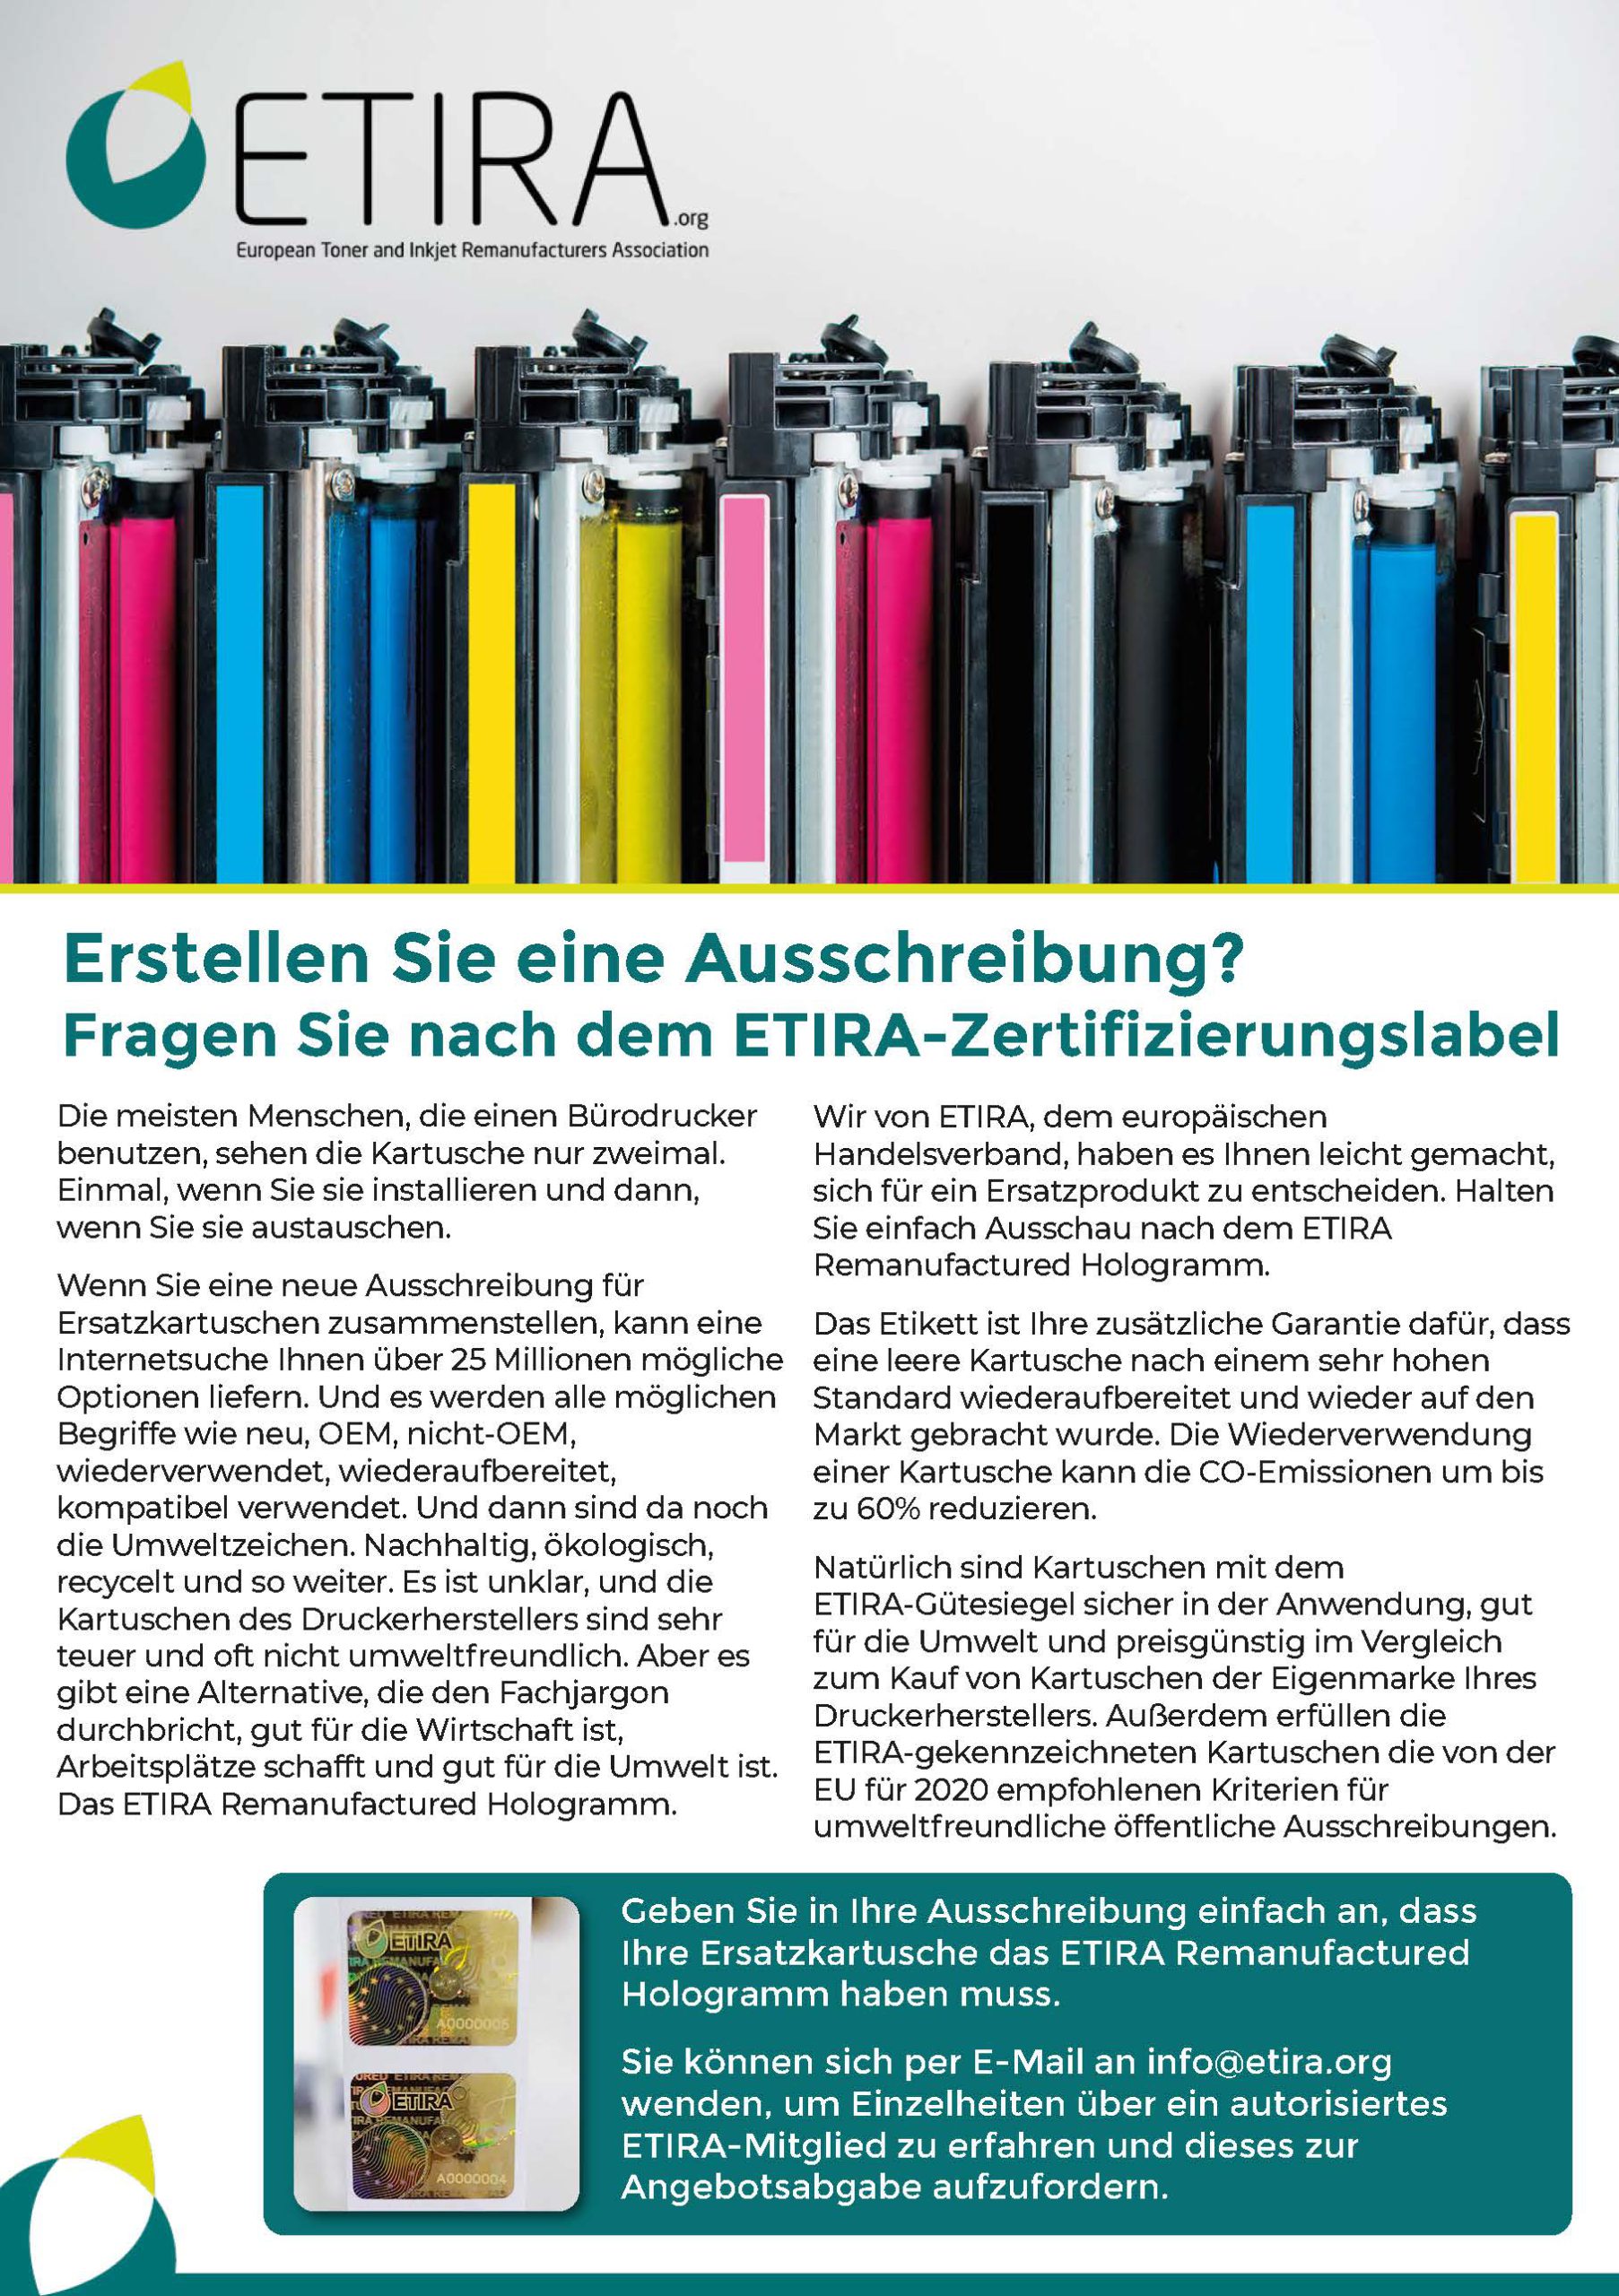 ETIRA Certification label – Etira